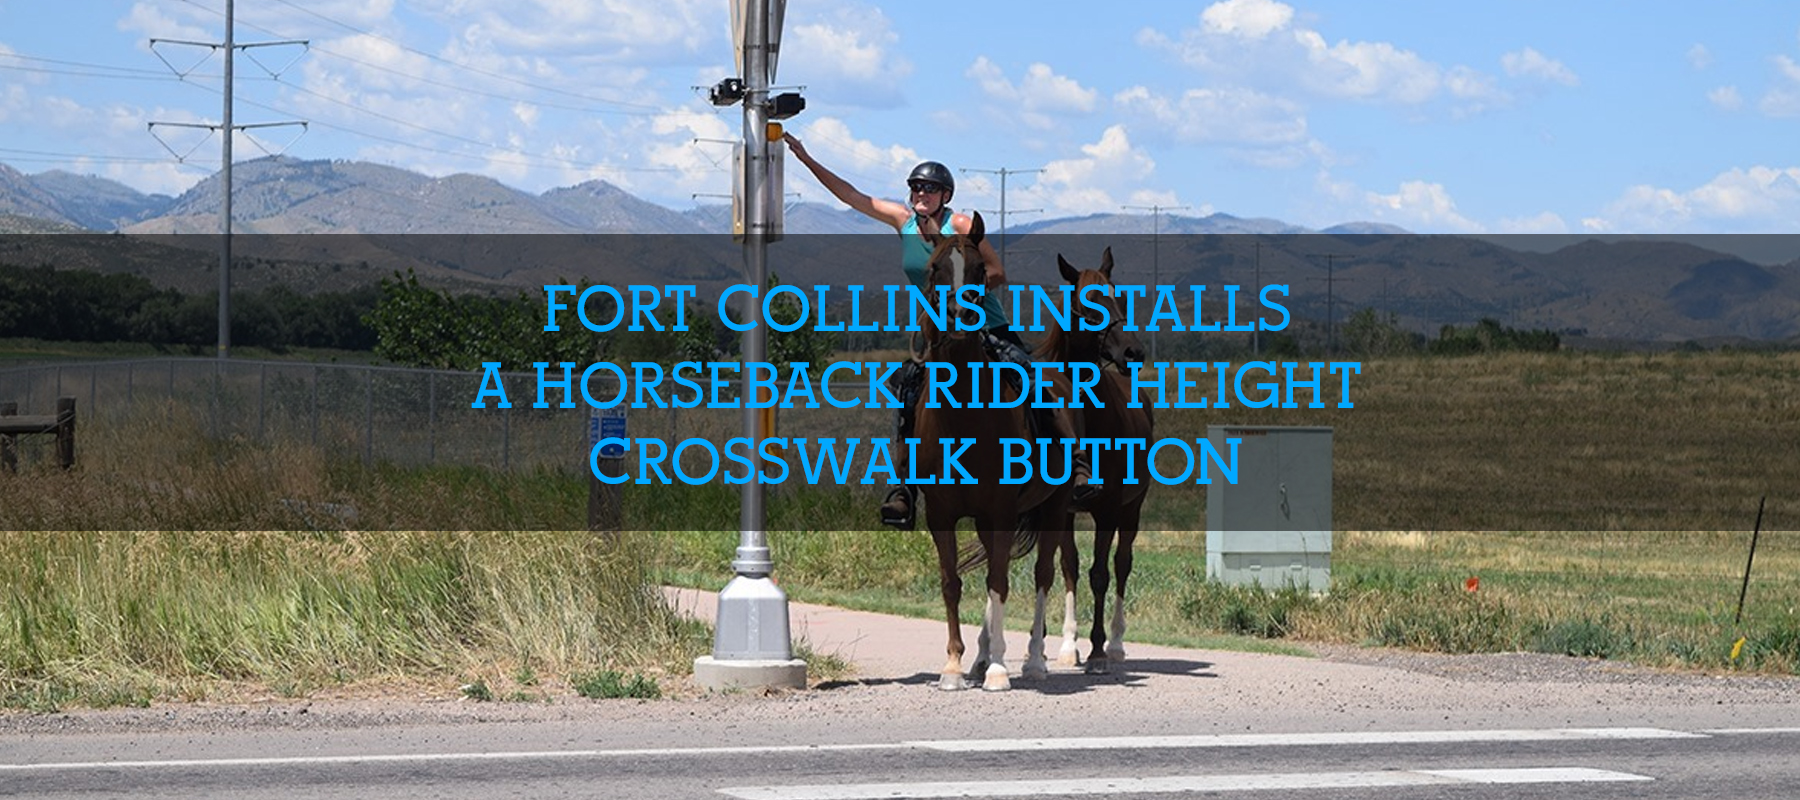 Crosswalk Button for Horseback Riders